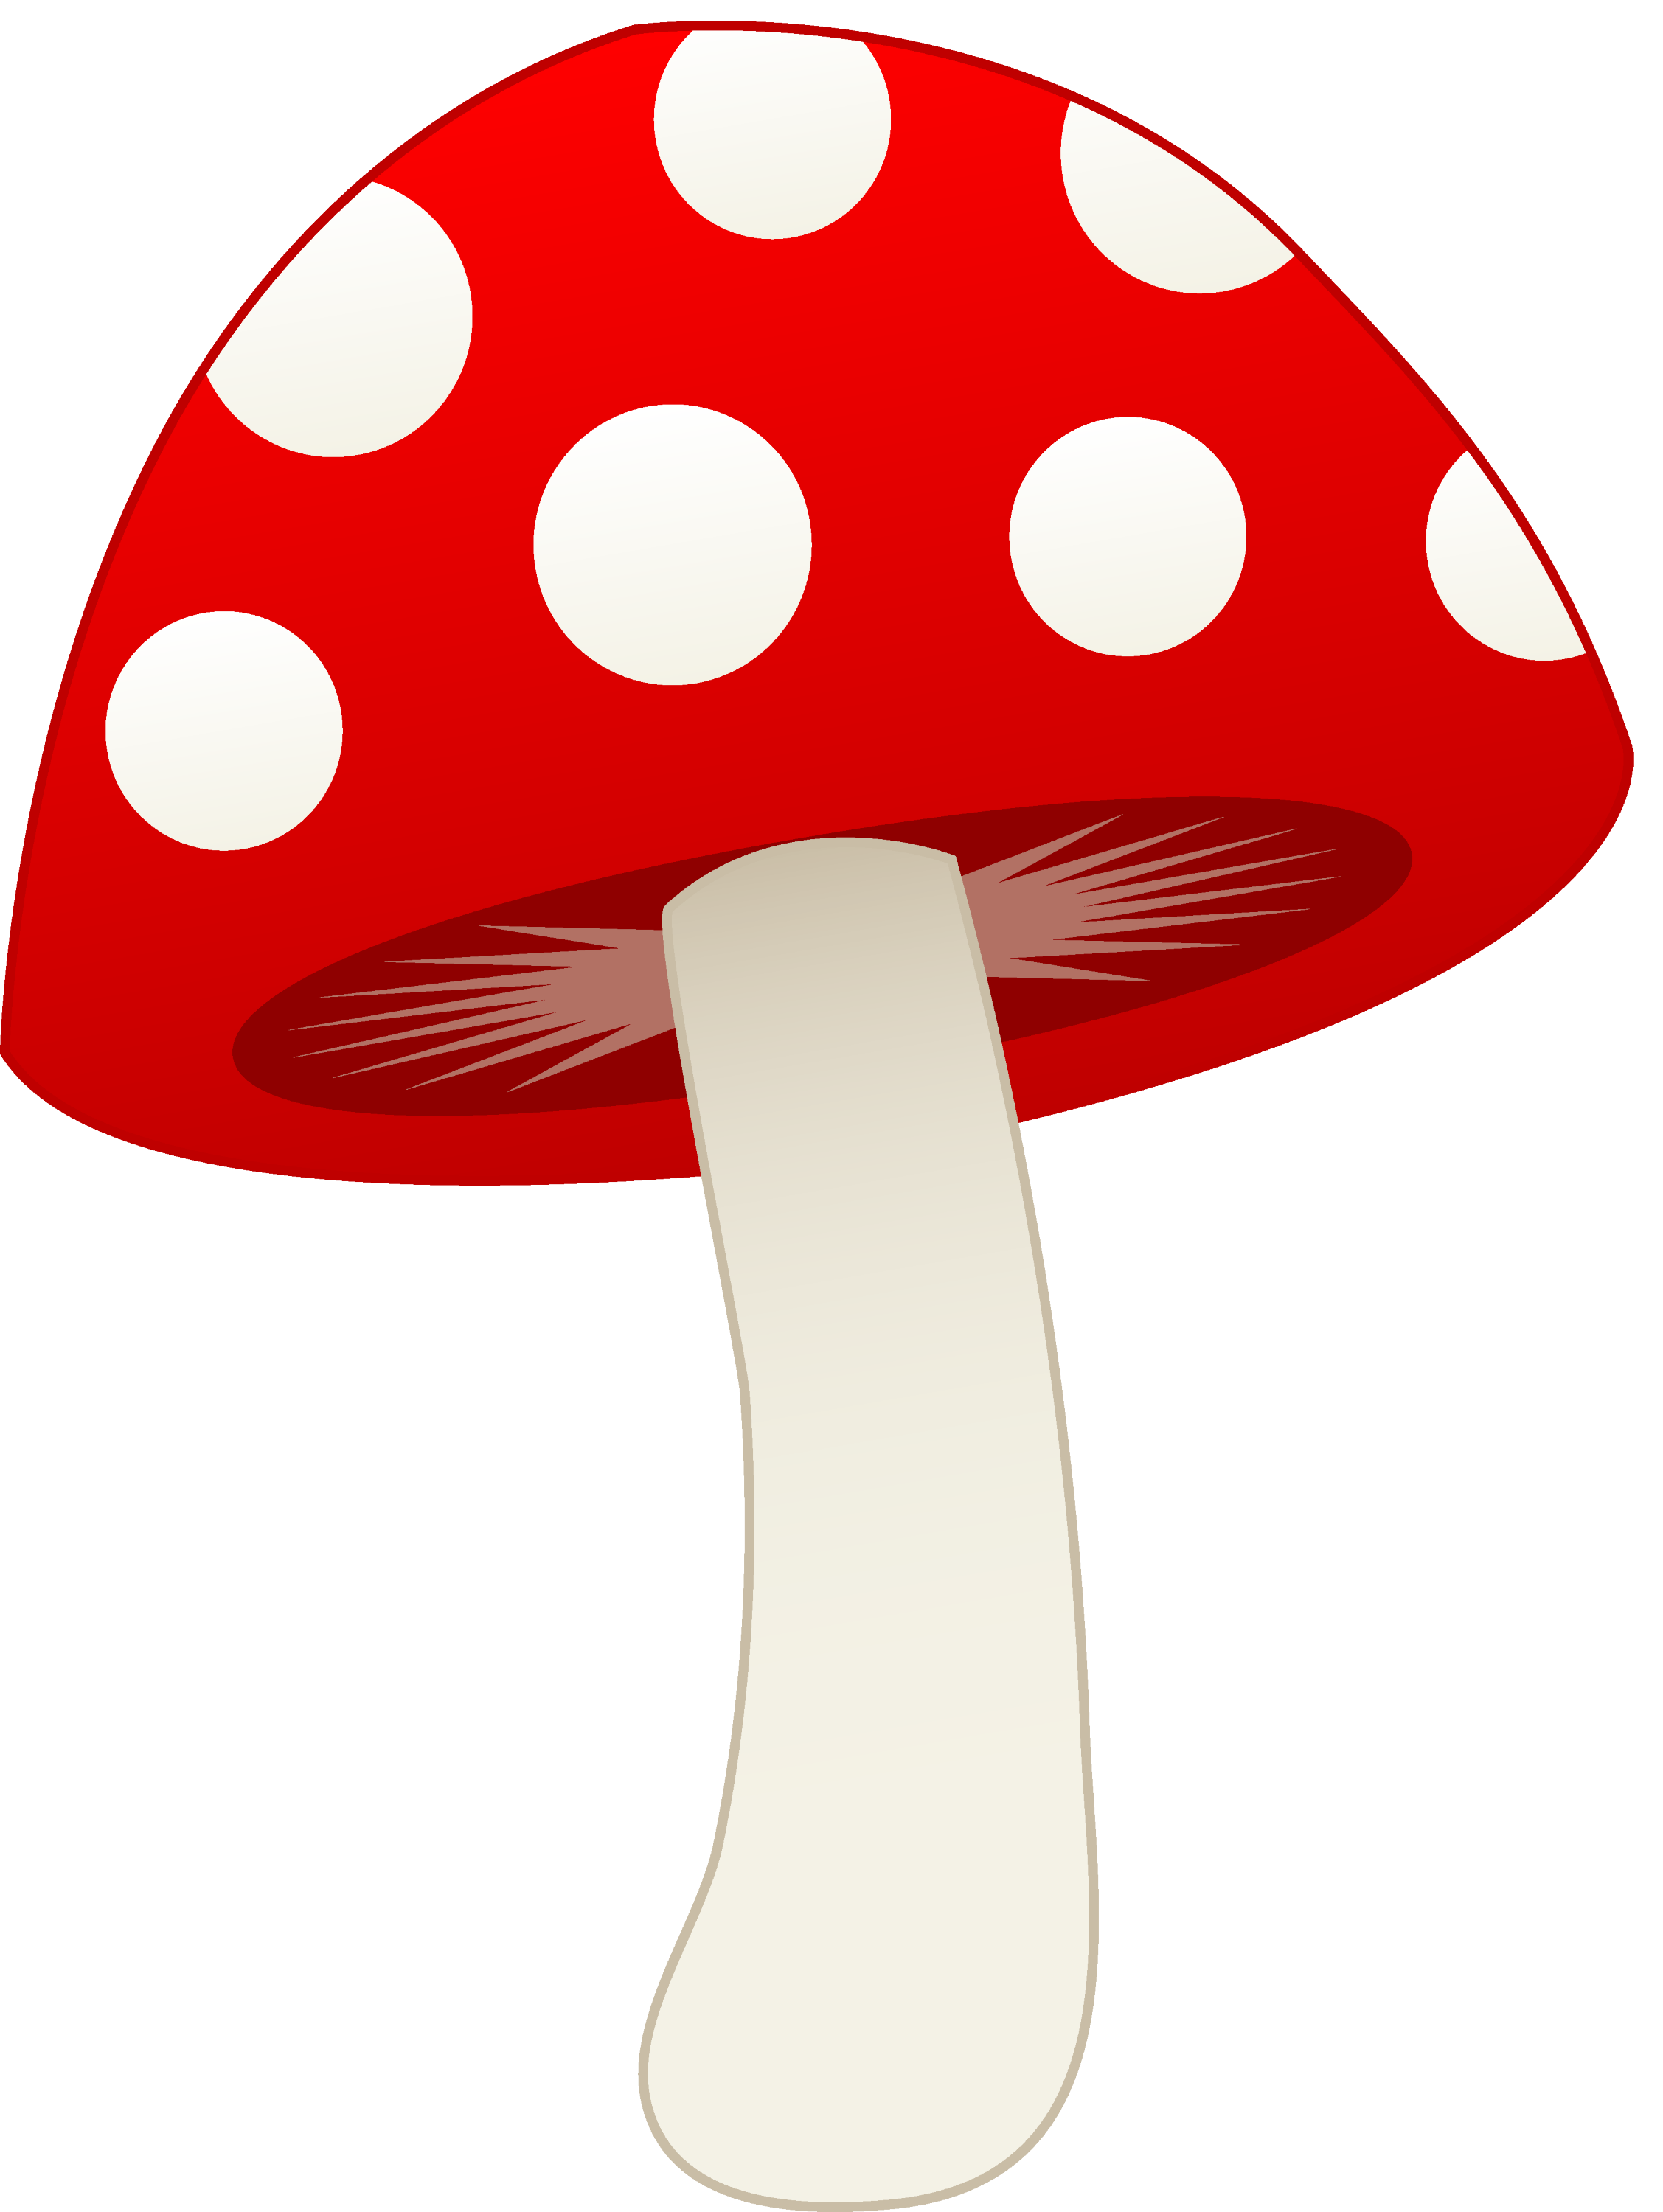 mushroom clip art images - photo #36